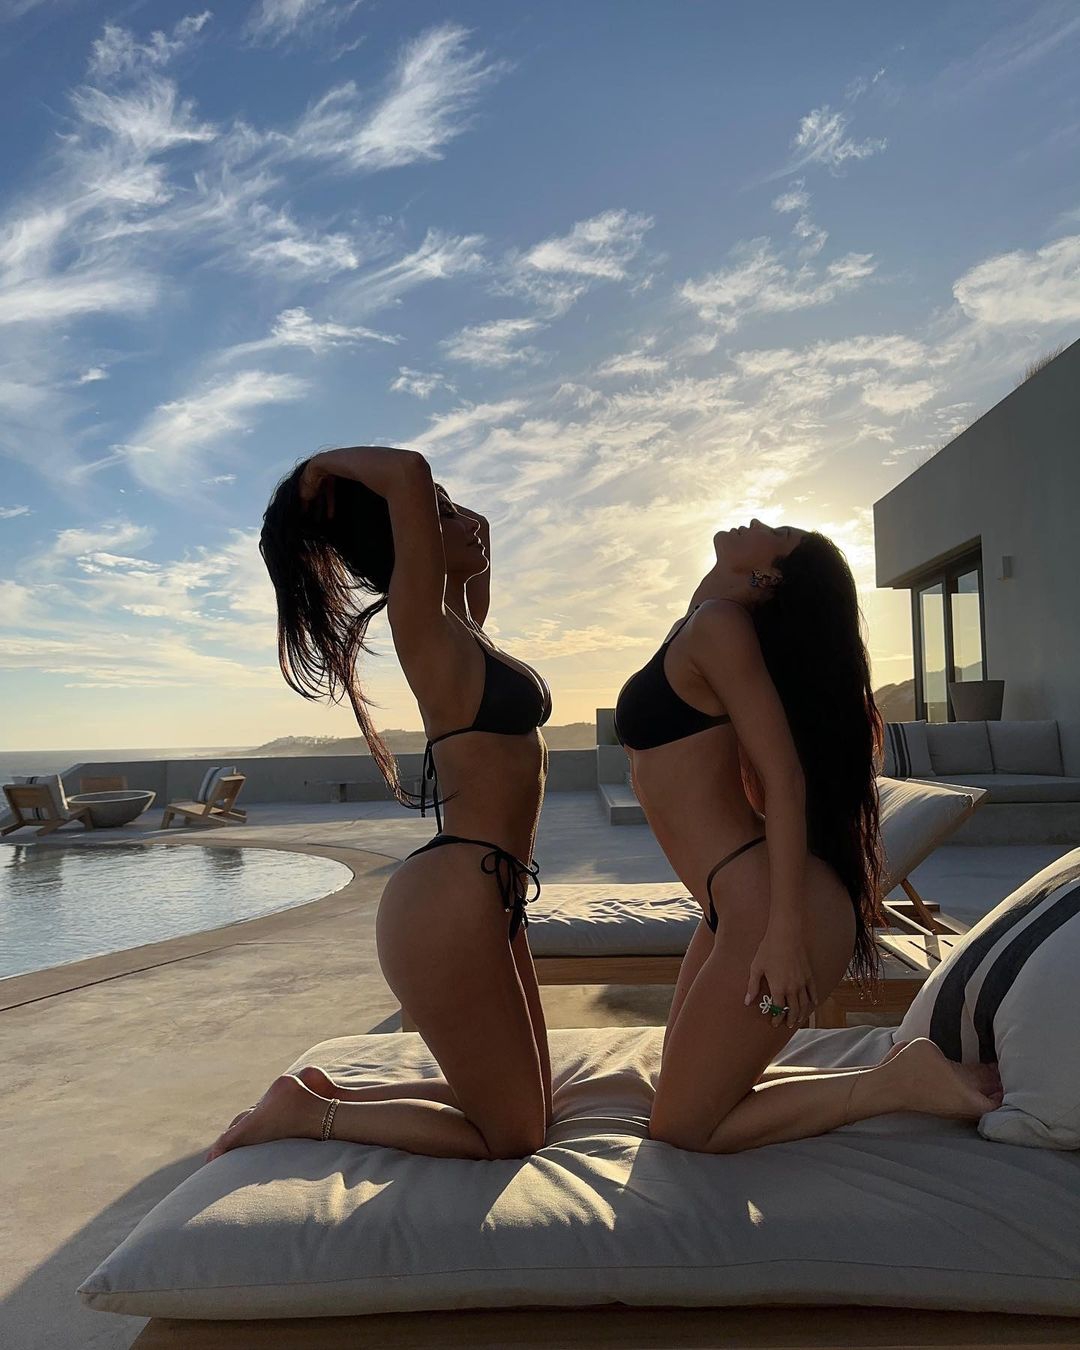 Kim Kardashian & Kylie Jenner